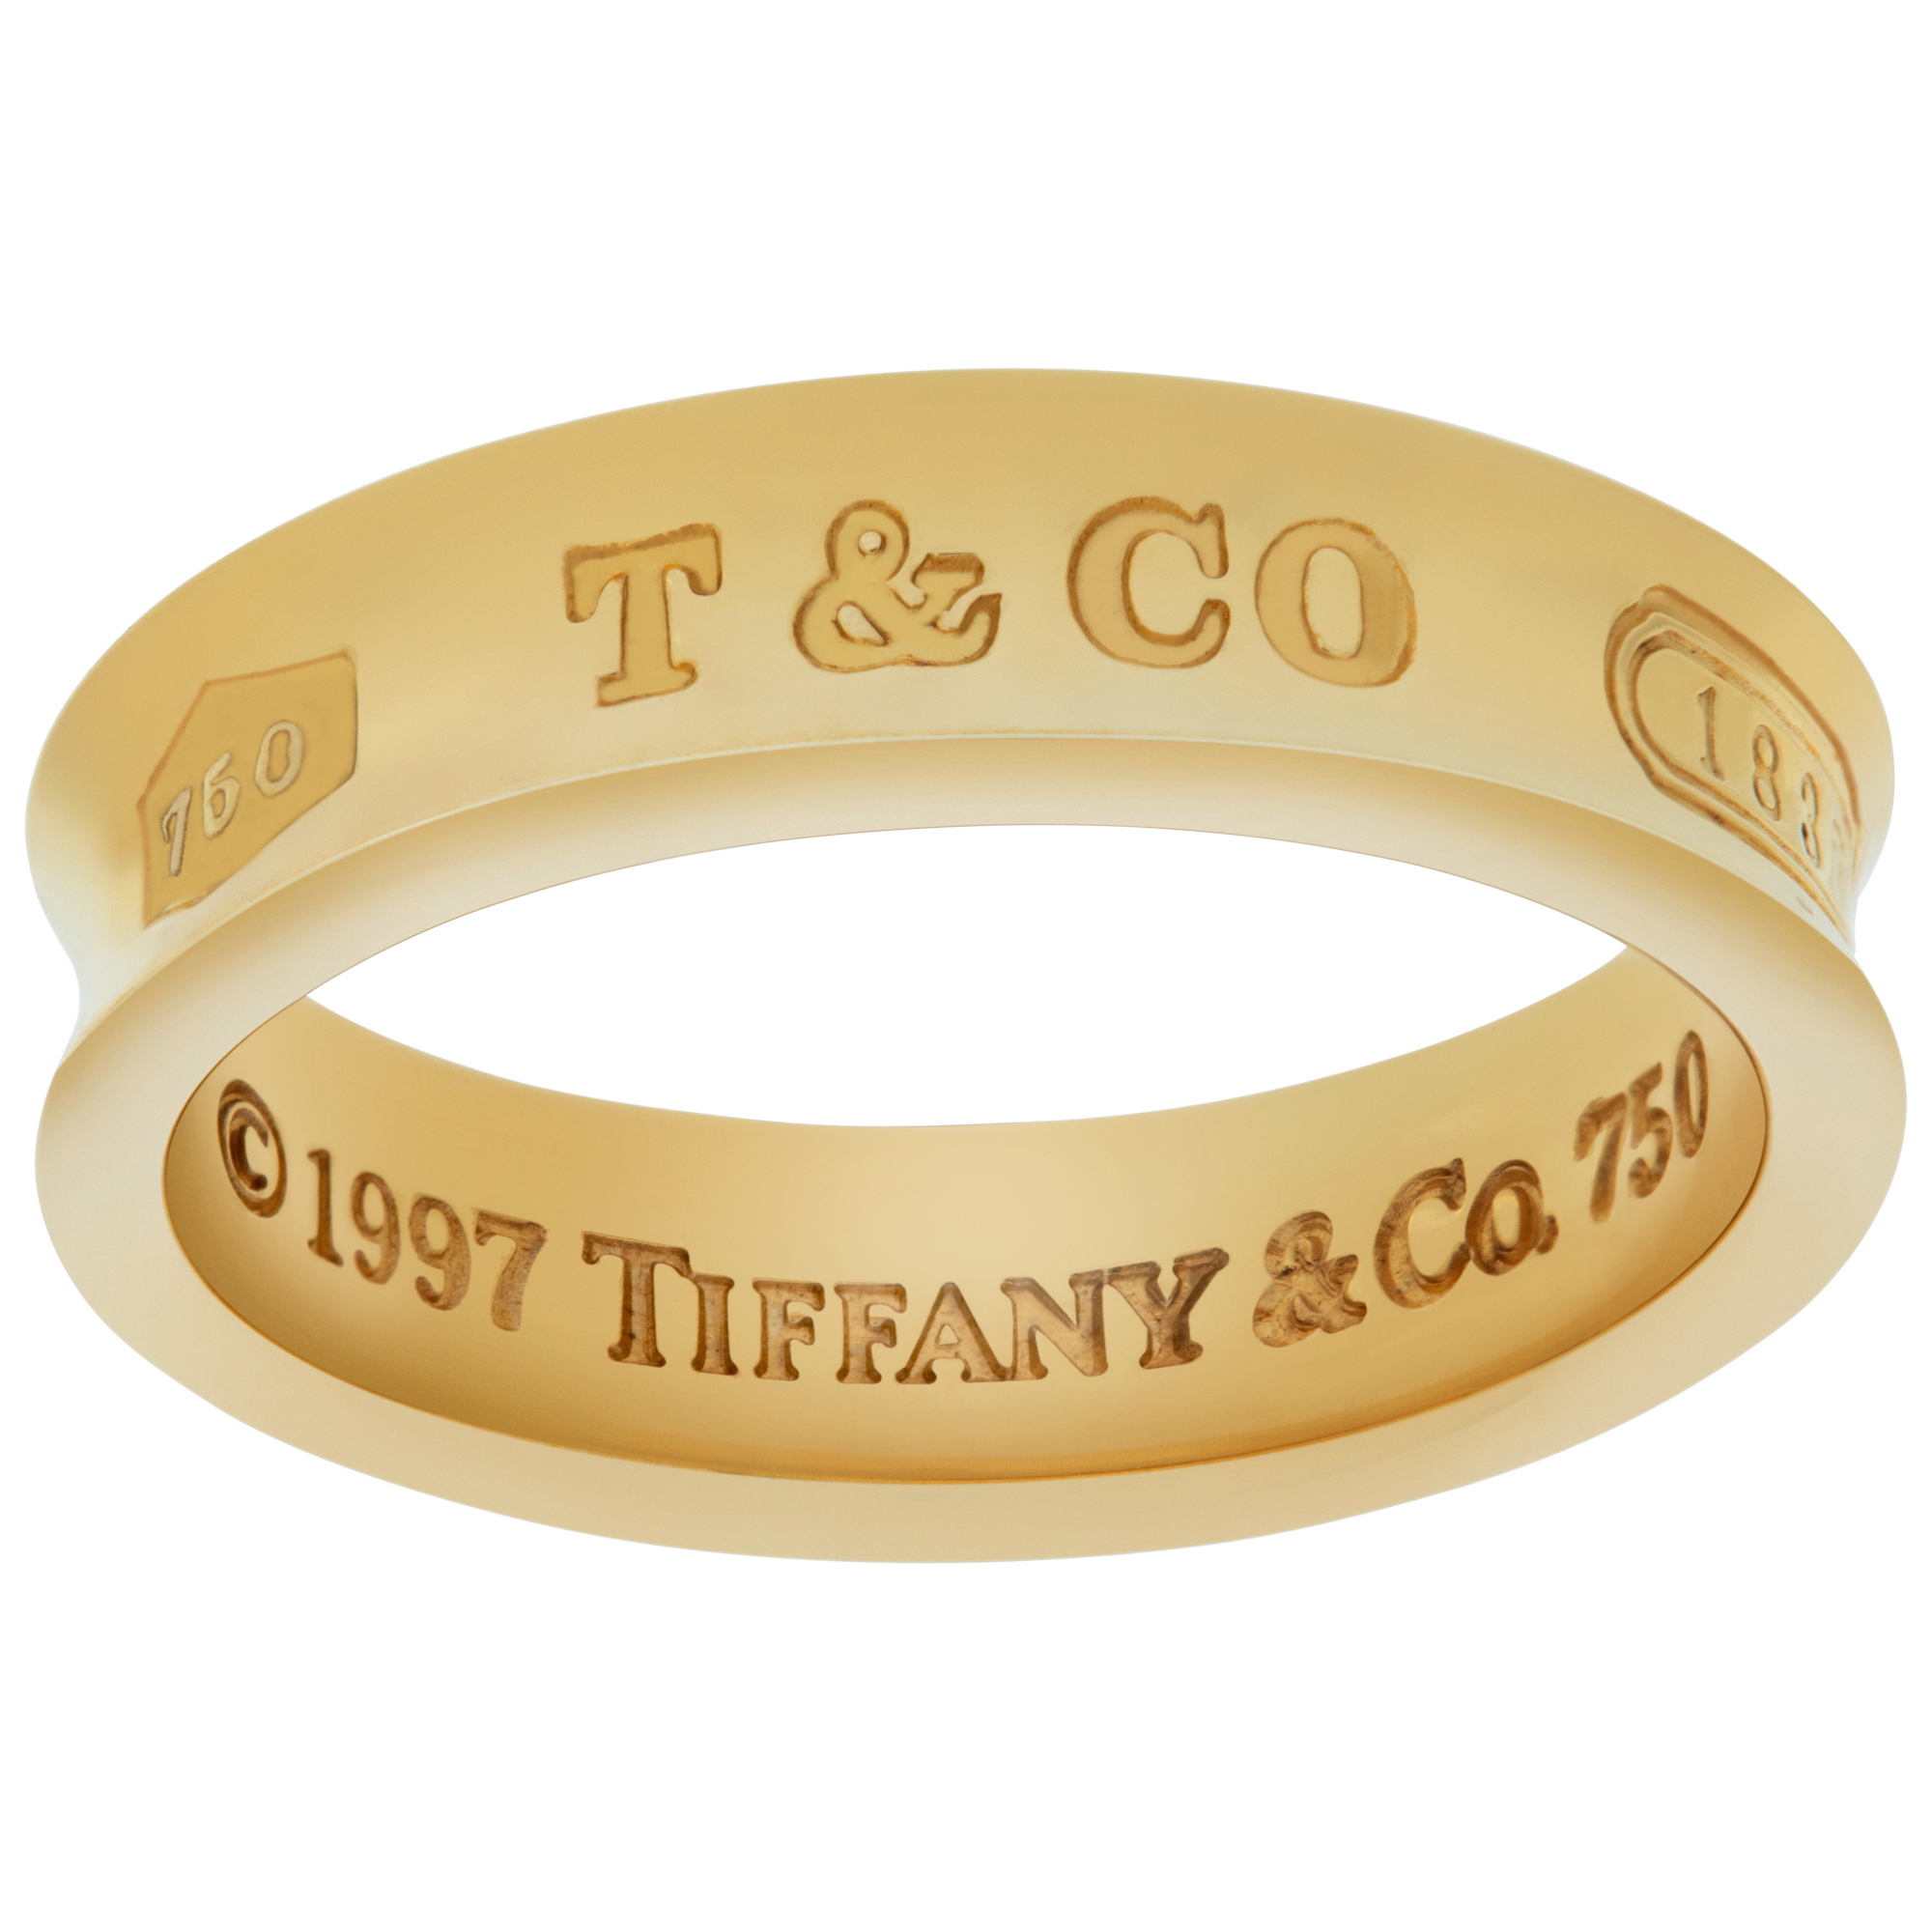 Tiffany & Co. wedding band 1837 anniversary band